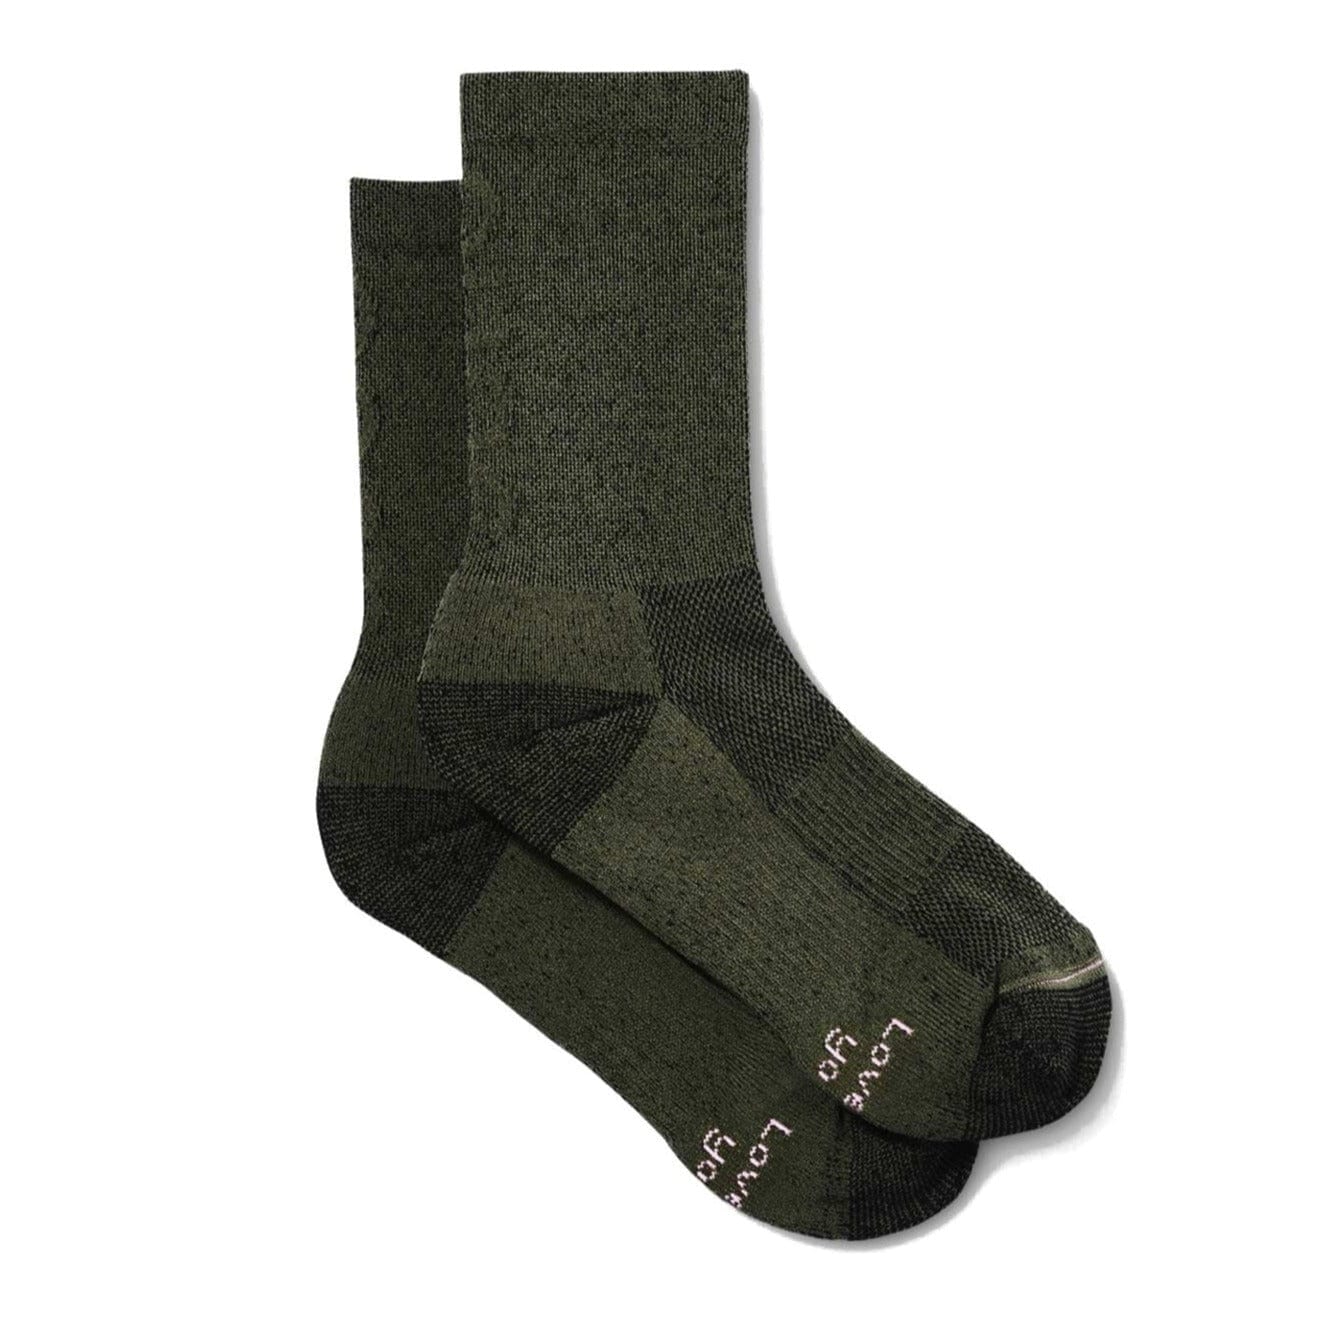 QUOC Merino Tech Wool Socks Green Camo / S Apparel - Clothing - Socks